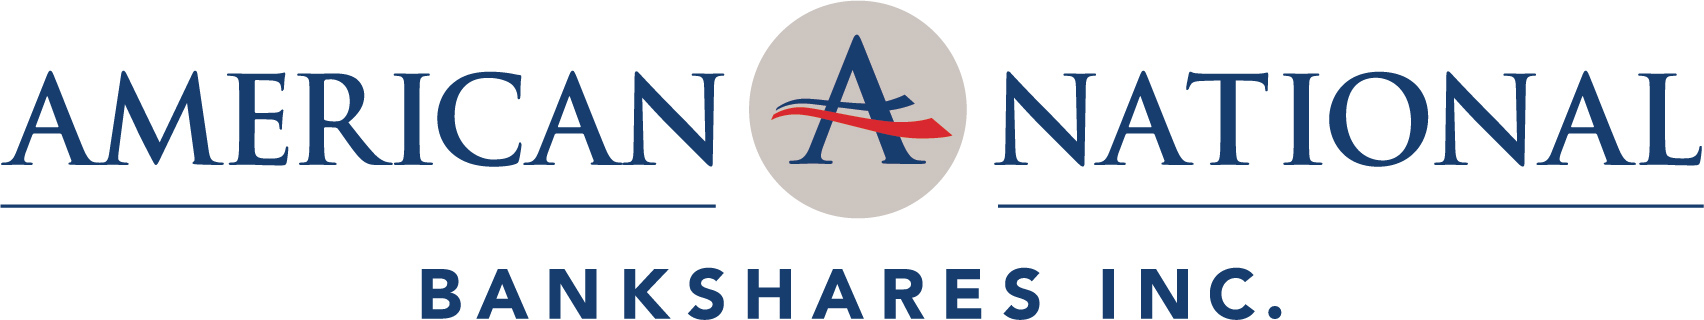 American National Bankshares Inc logo